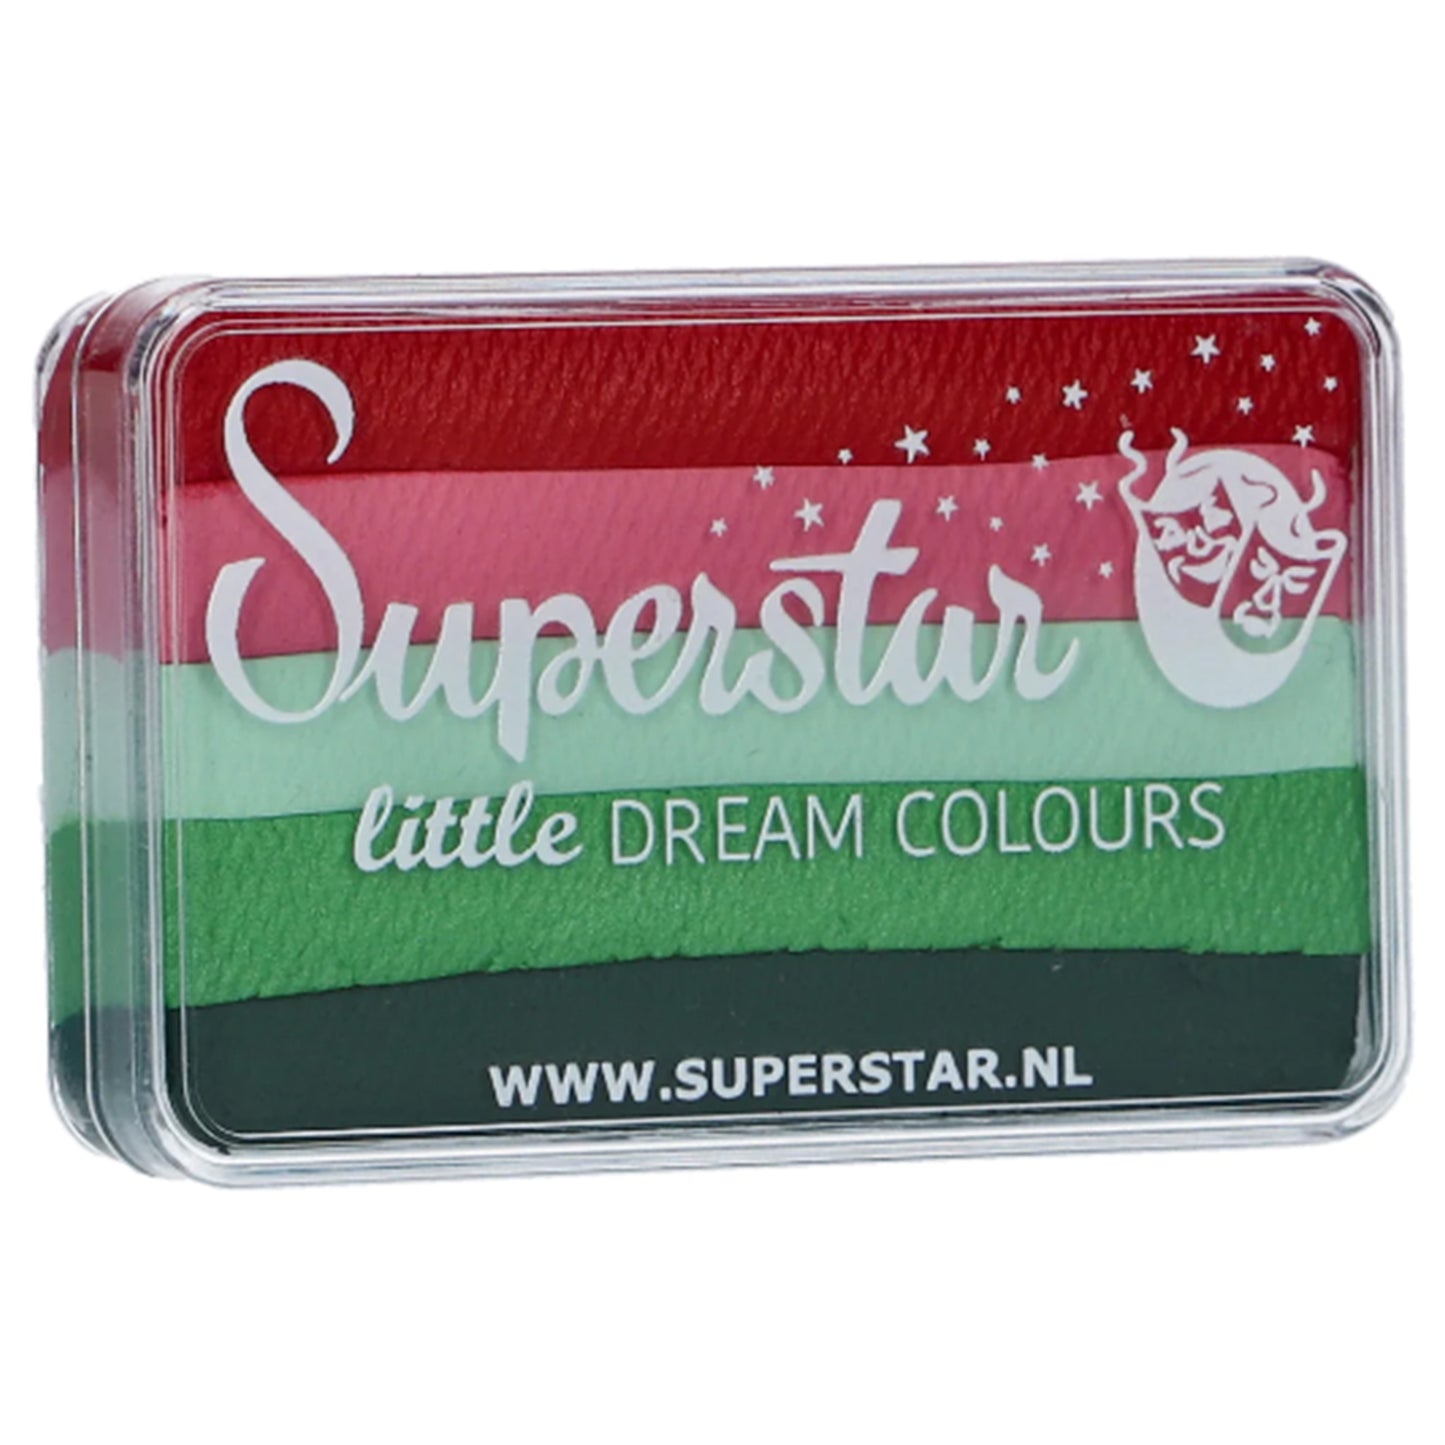 Superstar Little Dream Colours Rainbow Cake - Little Bloom (30 gm)